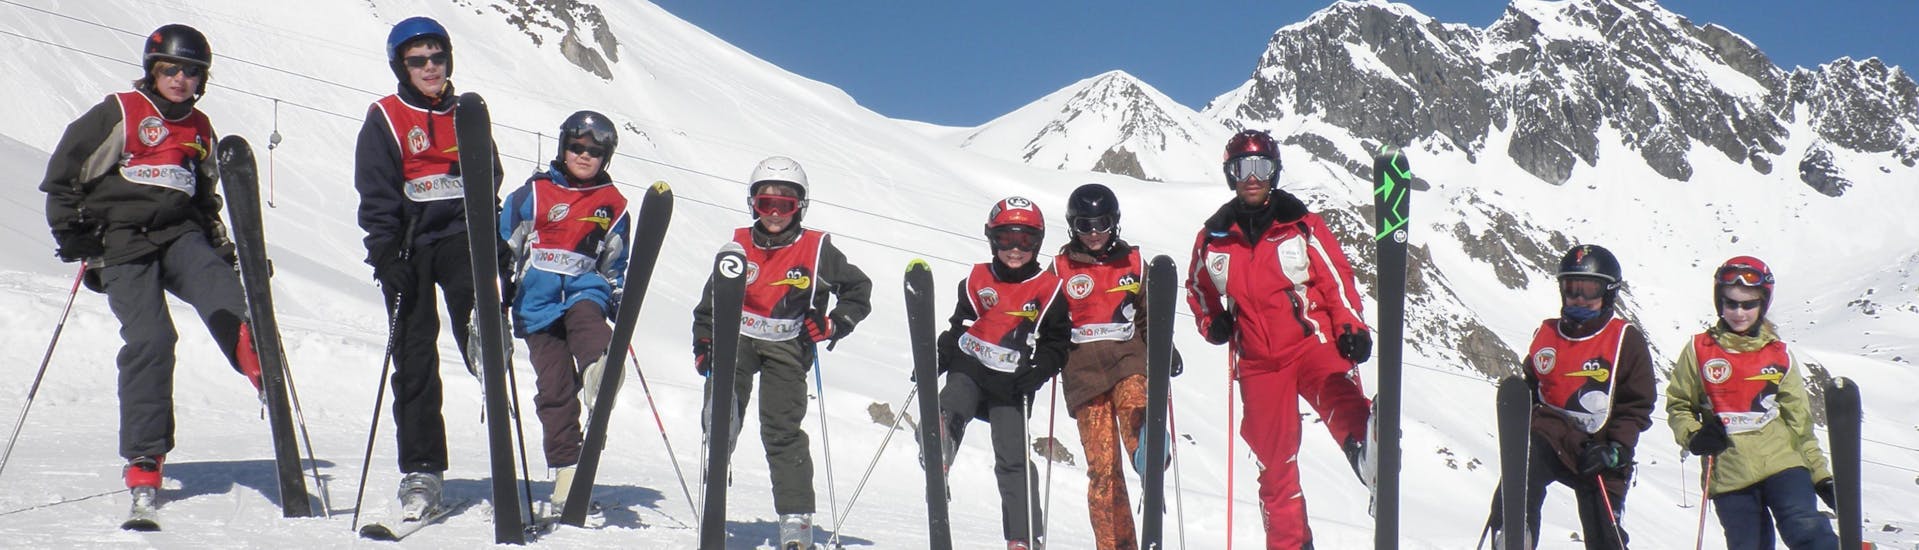 Kids Ski Lessons (3-16 y.) for Advanced Skiers - Full Day with Swiss Ski School Samnaun - Hero image